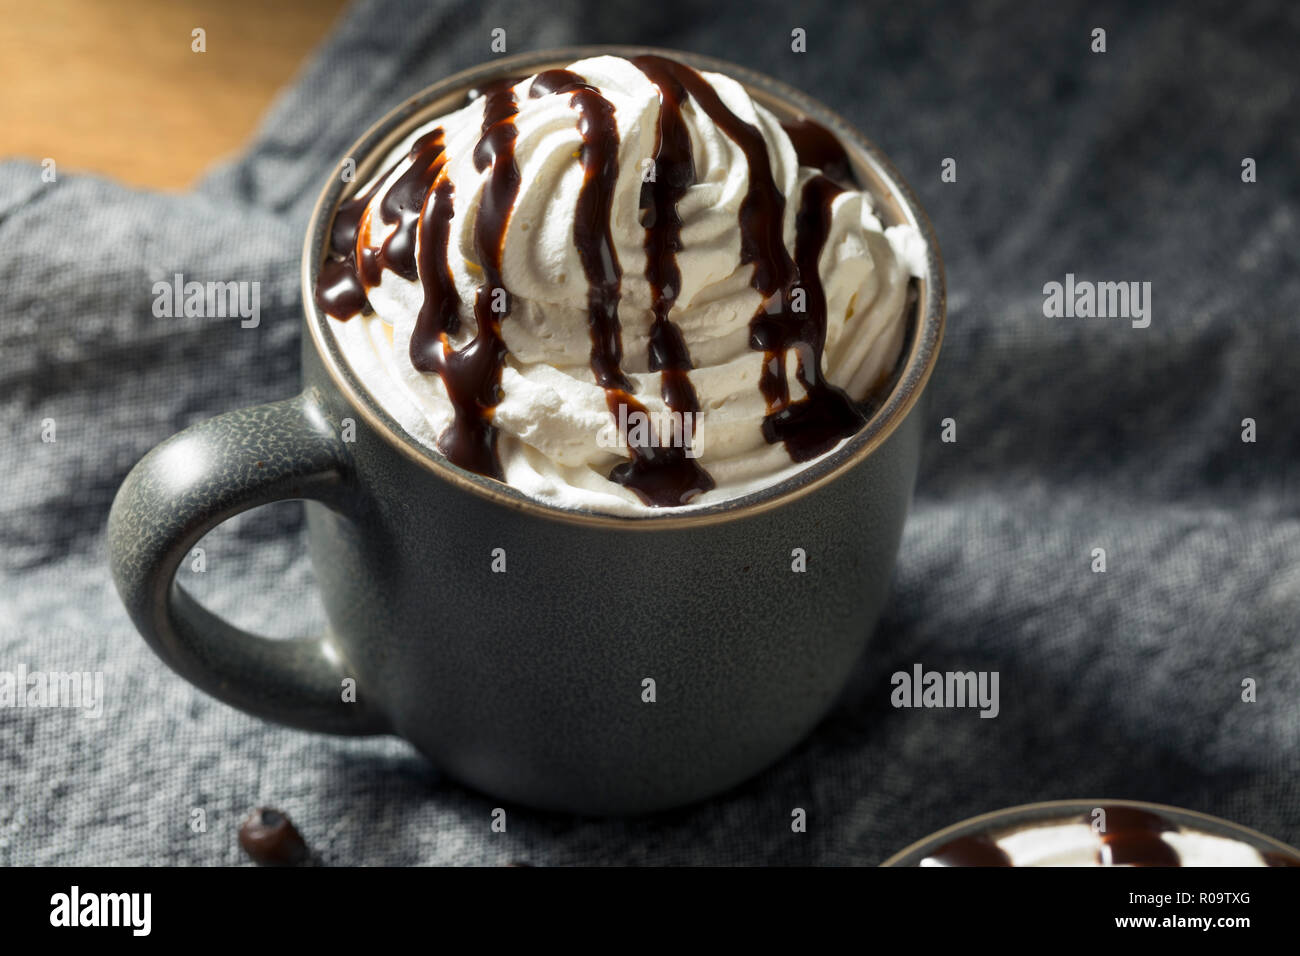 Warm Mocha Iced Coffee with Whipped Cream Stock Photo